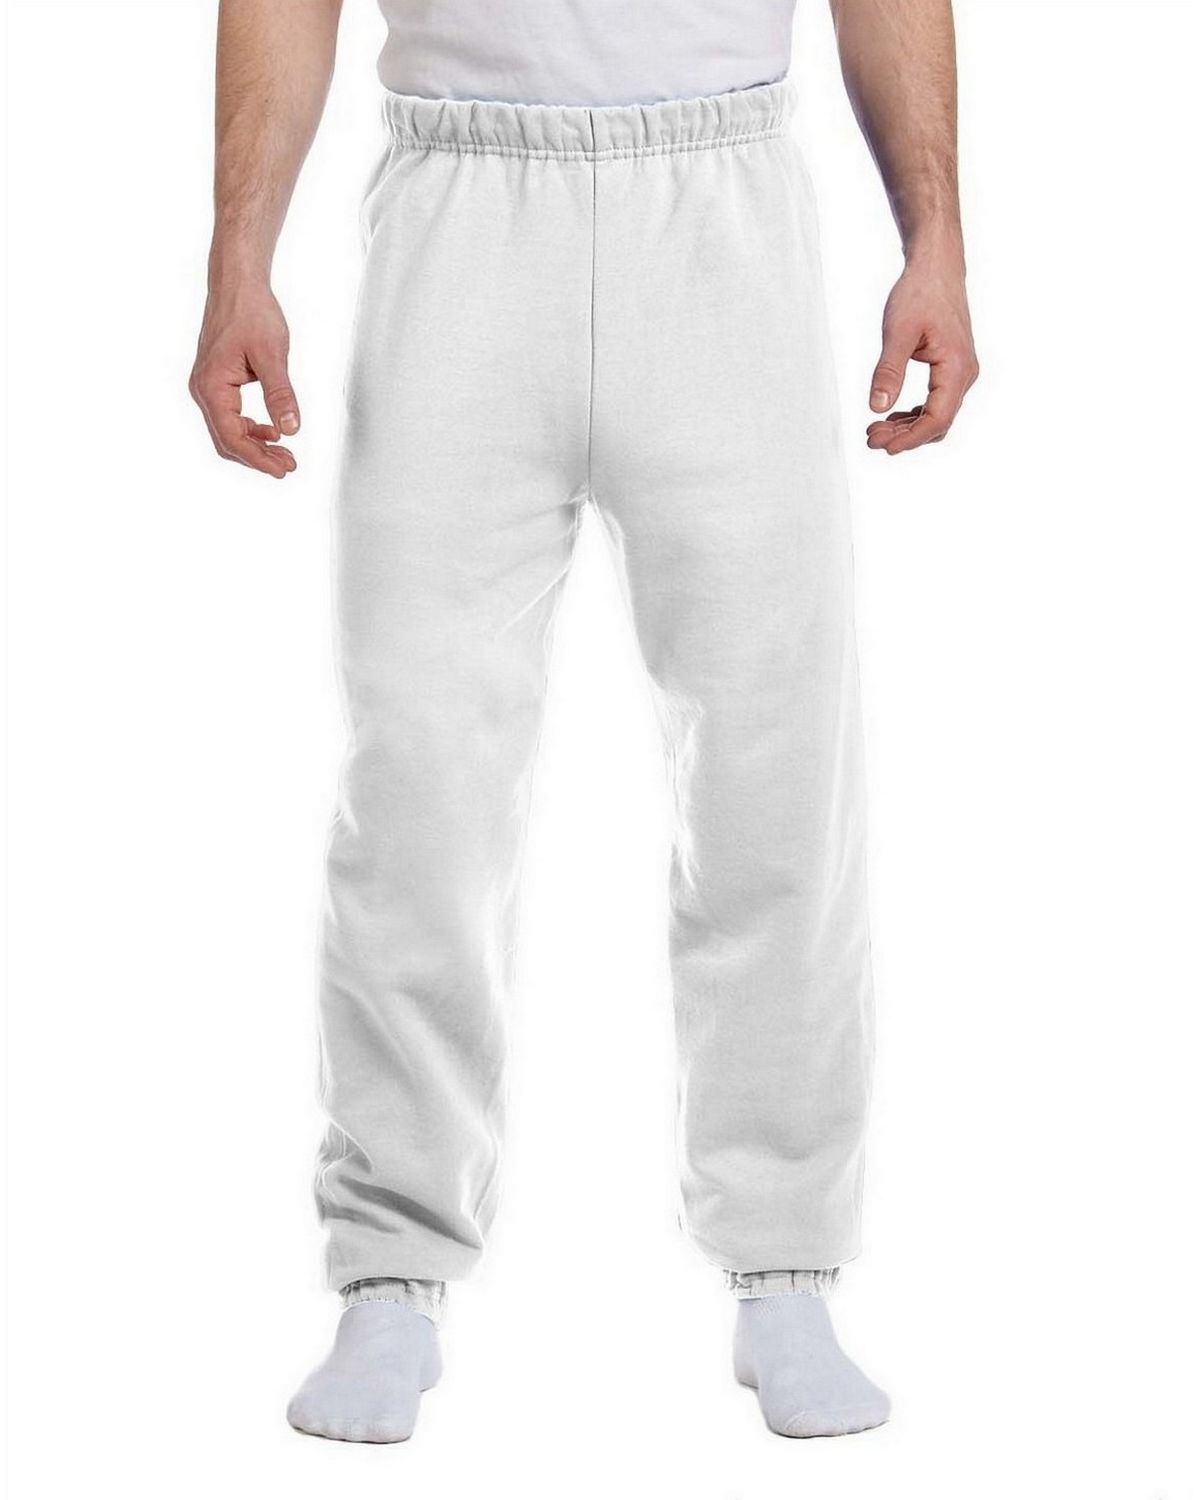 Men's White Sweatpants